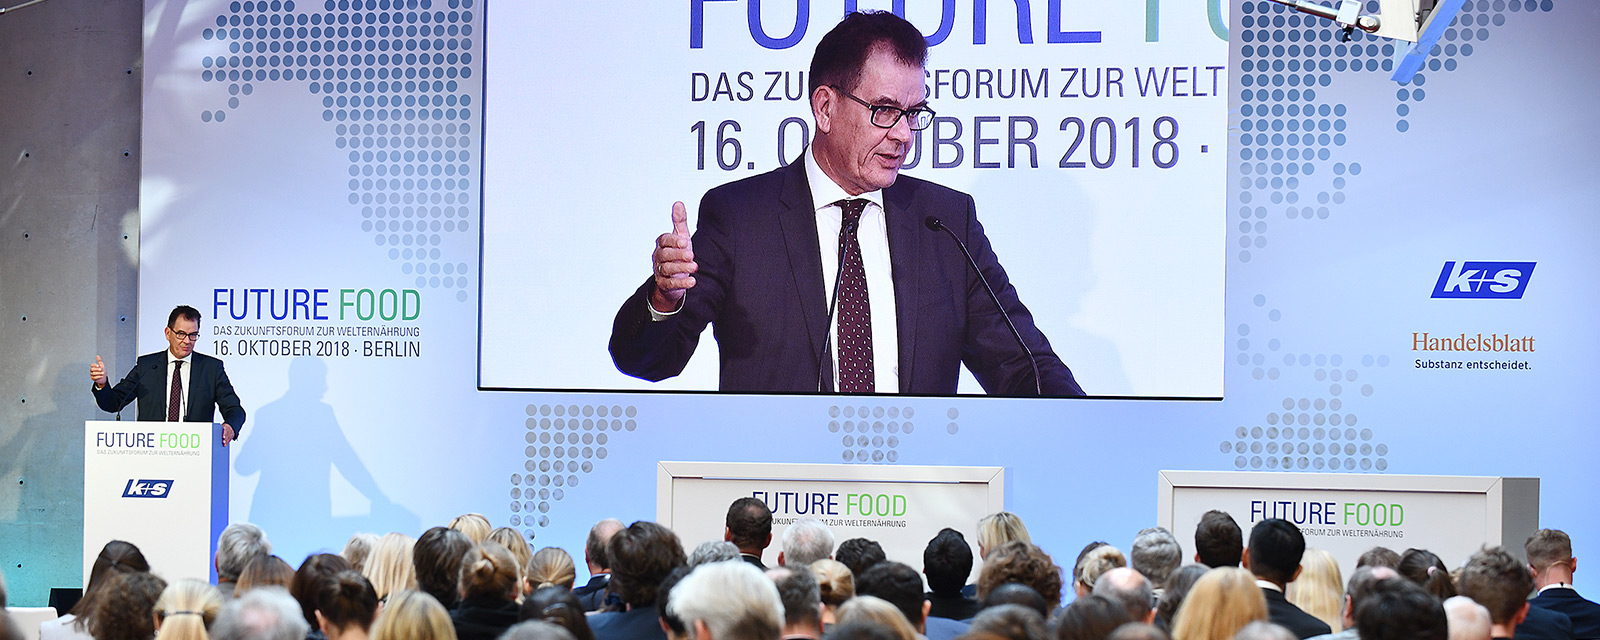 FUTURE FOOD FORUM 2018